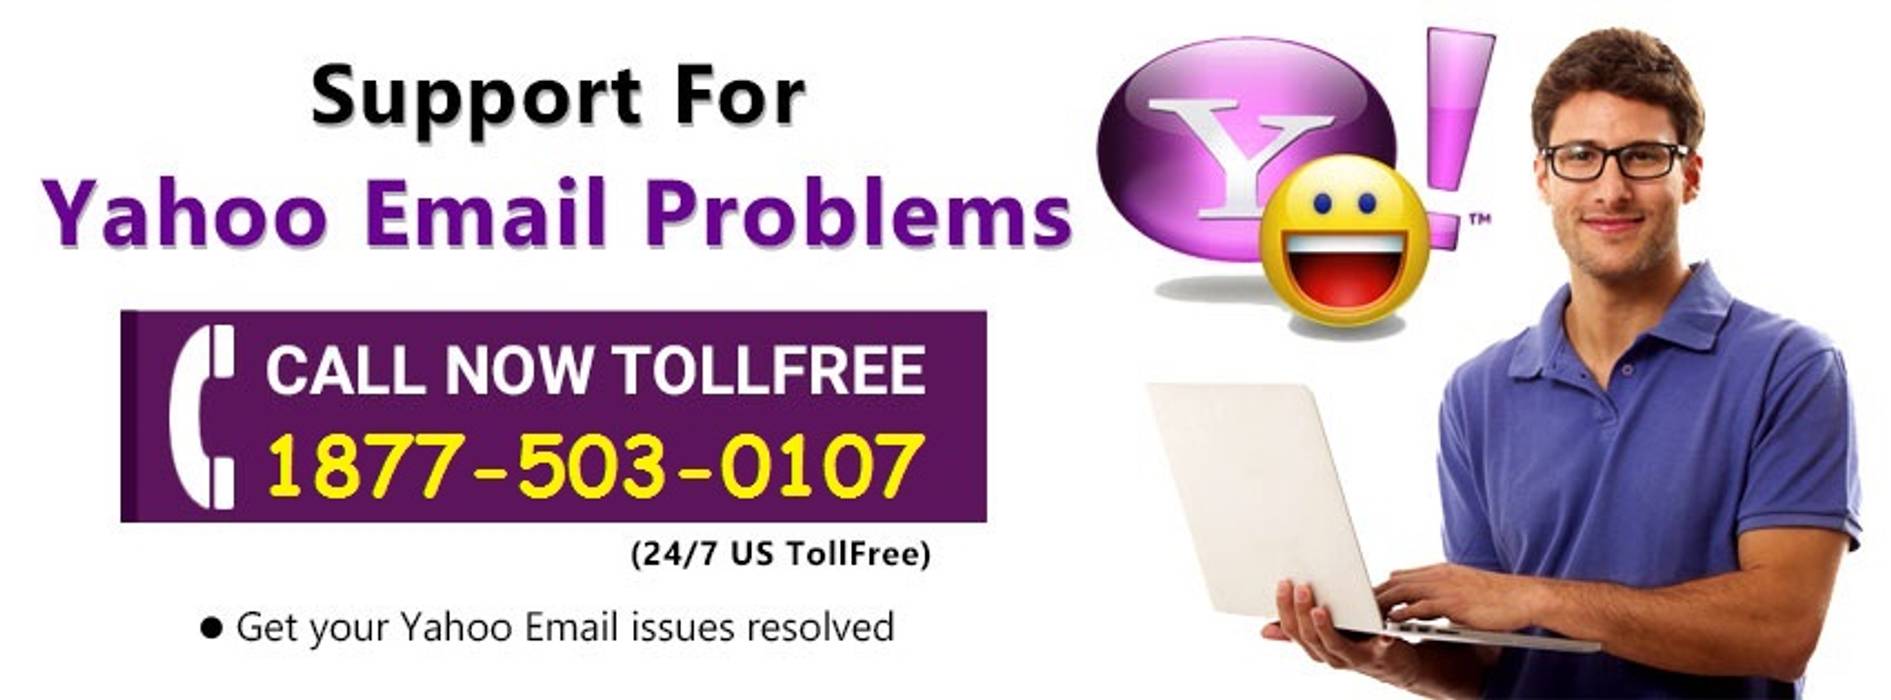 Contact Yahoo Customer Support Phone Number 1877-503-0107, Yahoo Mail Support Number 1877-503-0107 Yahoo Mail Support Number 1877-503-0107 Підлоги Інженерне дерево Прозорий